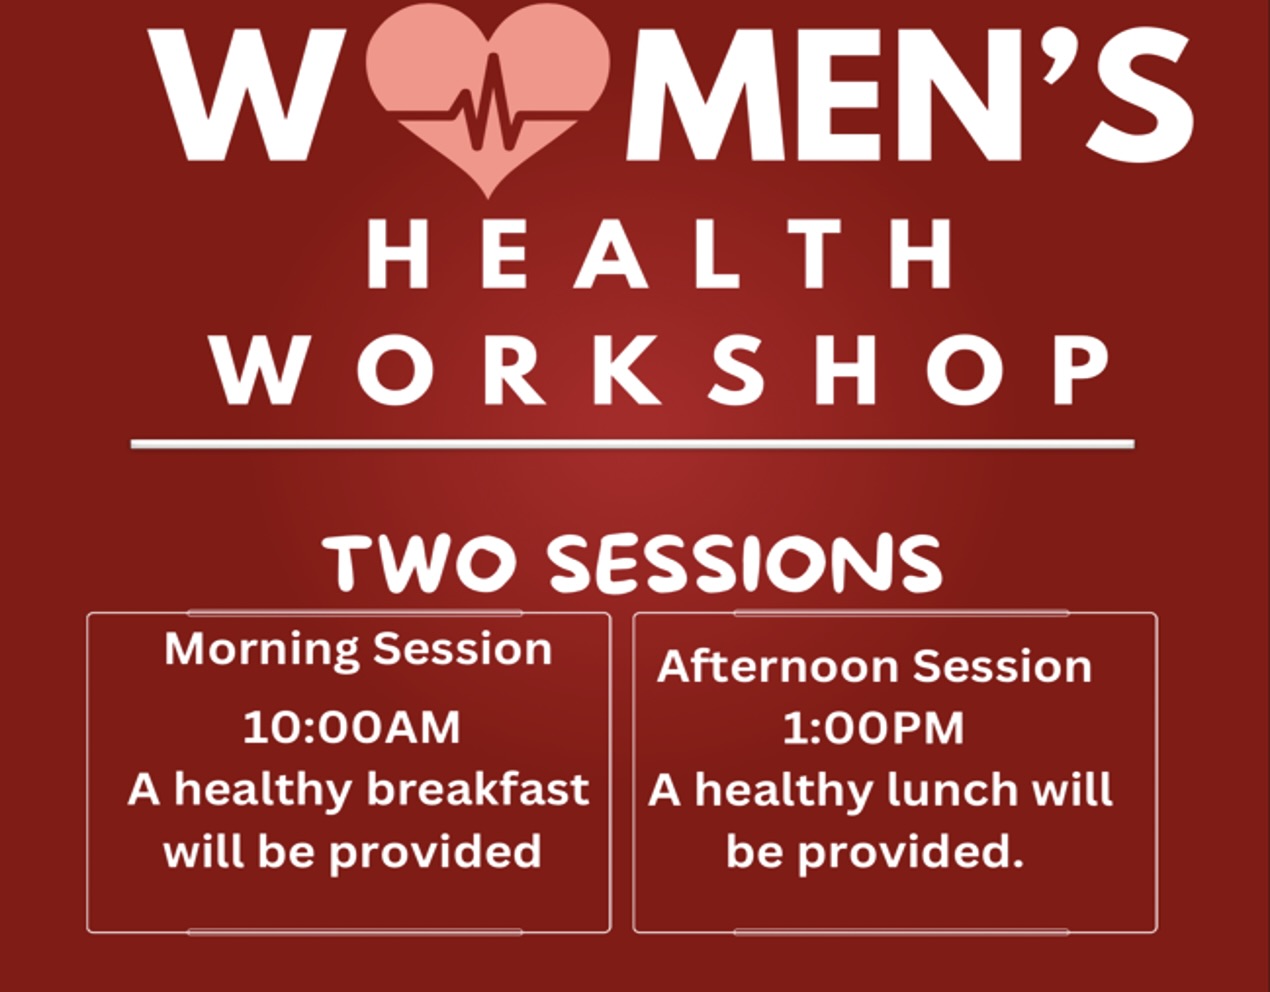 Women's Health Workshop